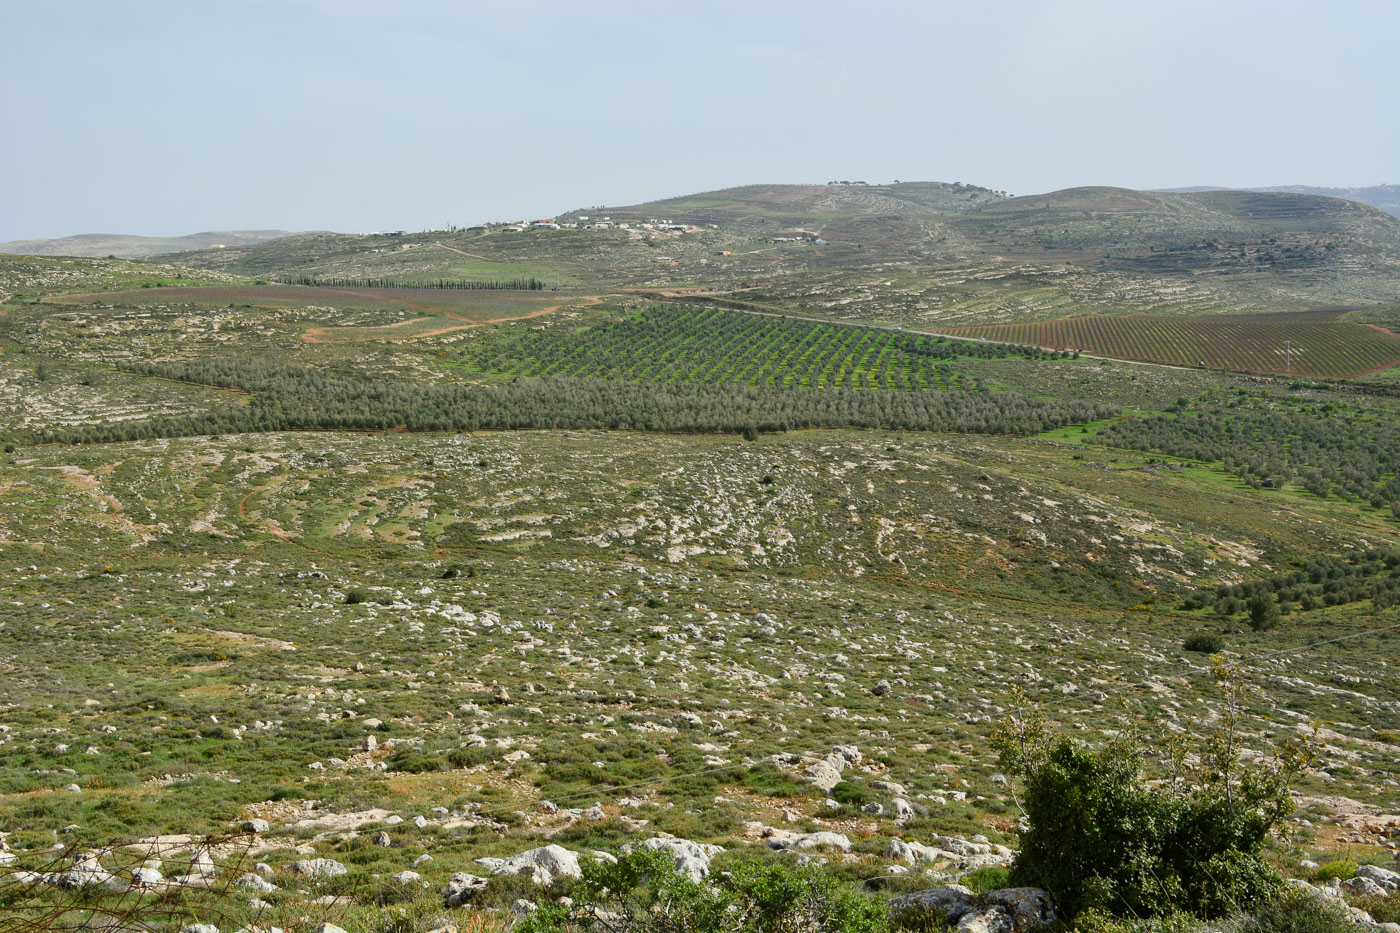 Самария, image of landscape/habitat.